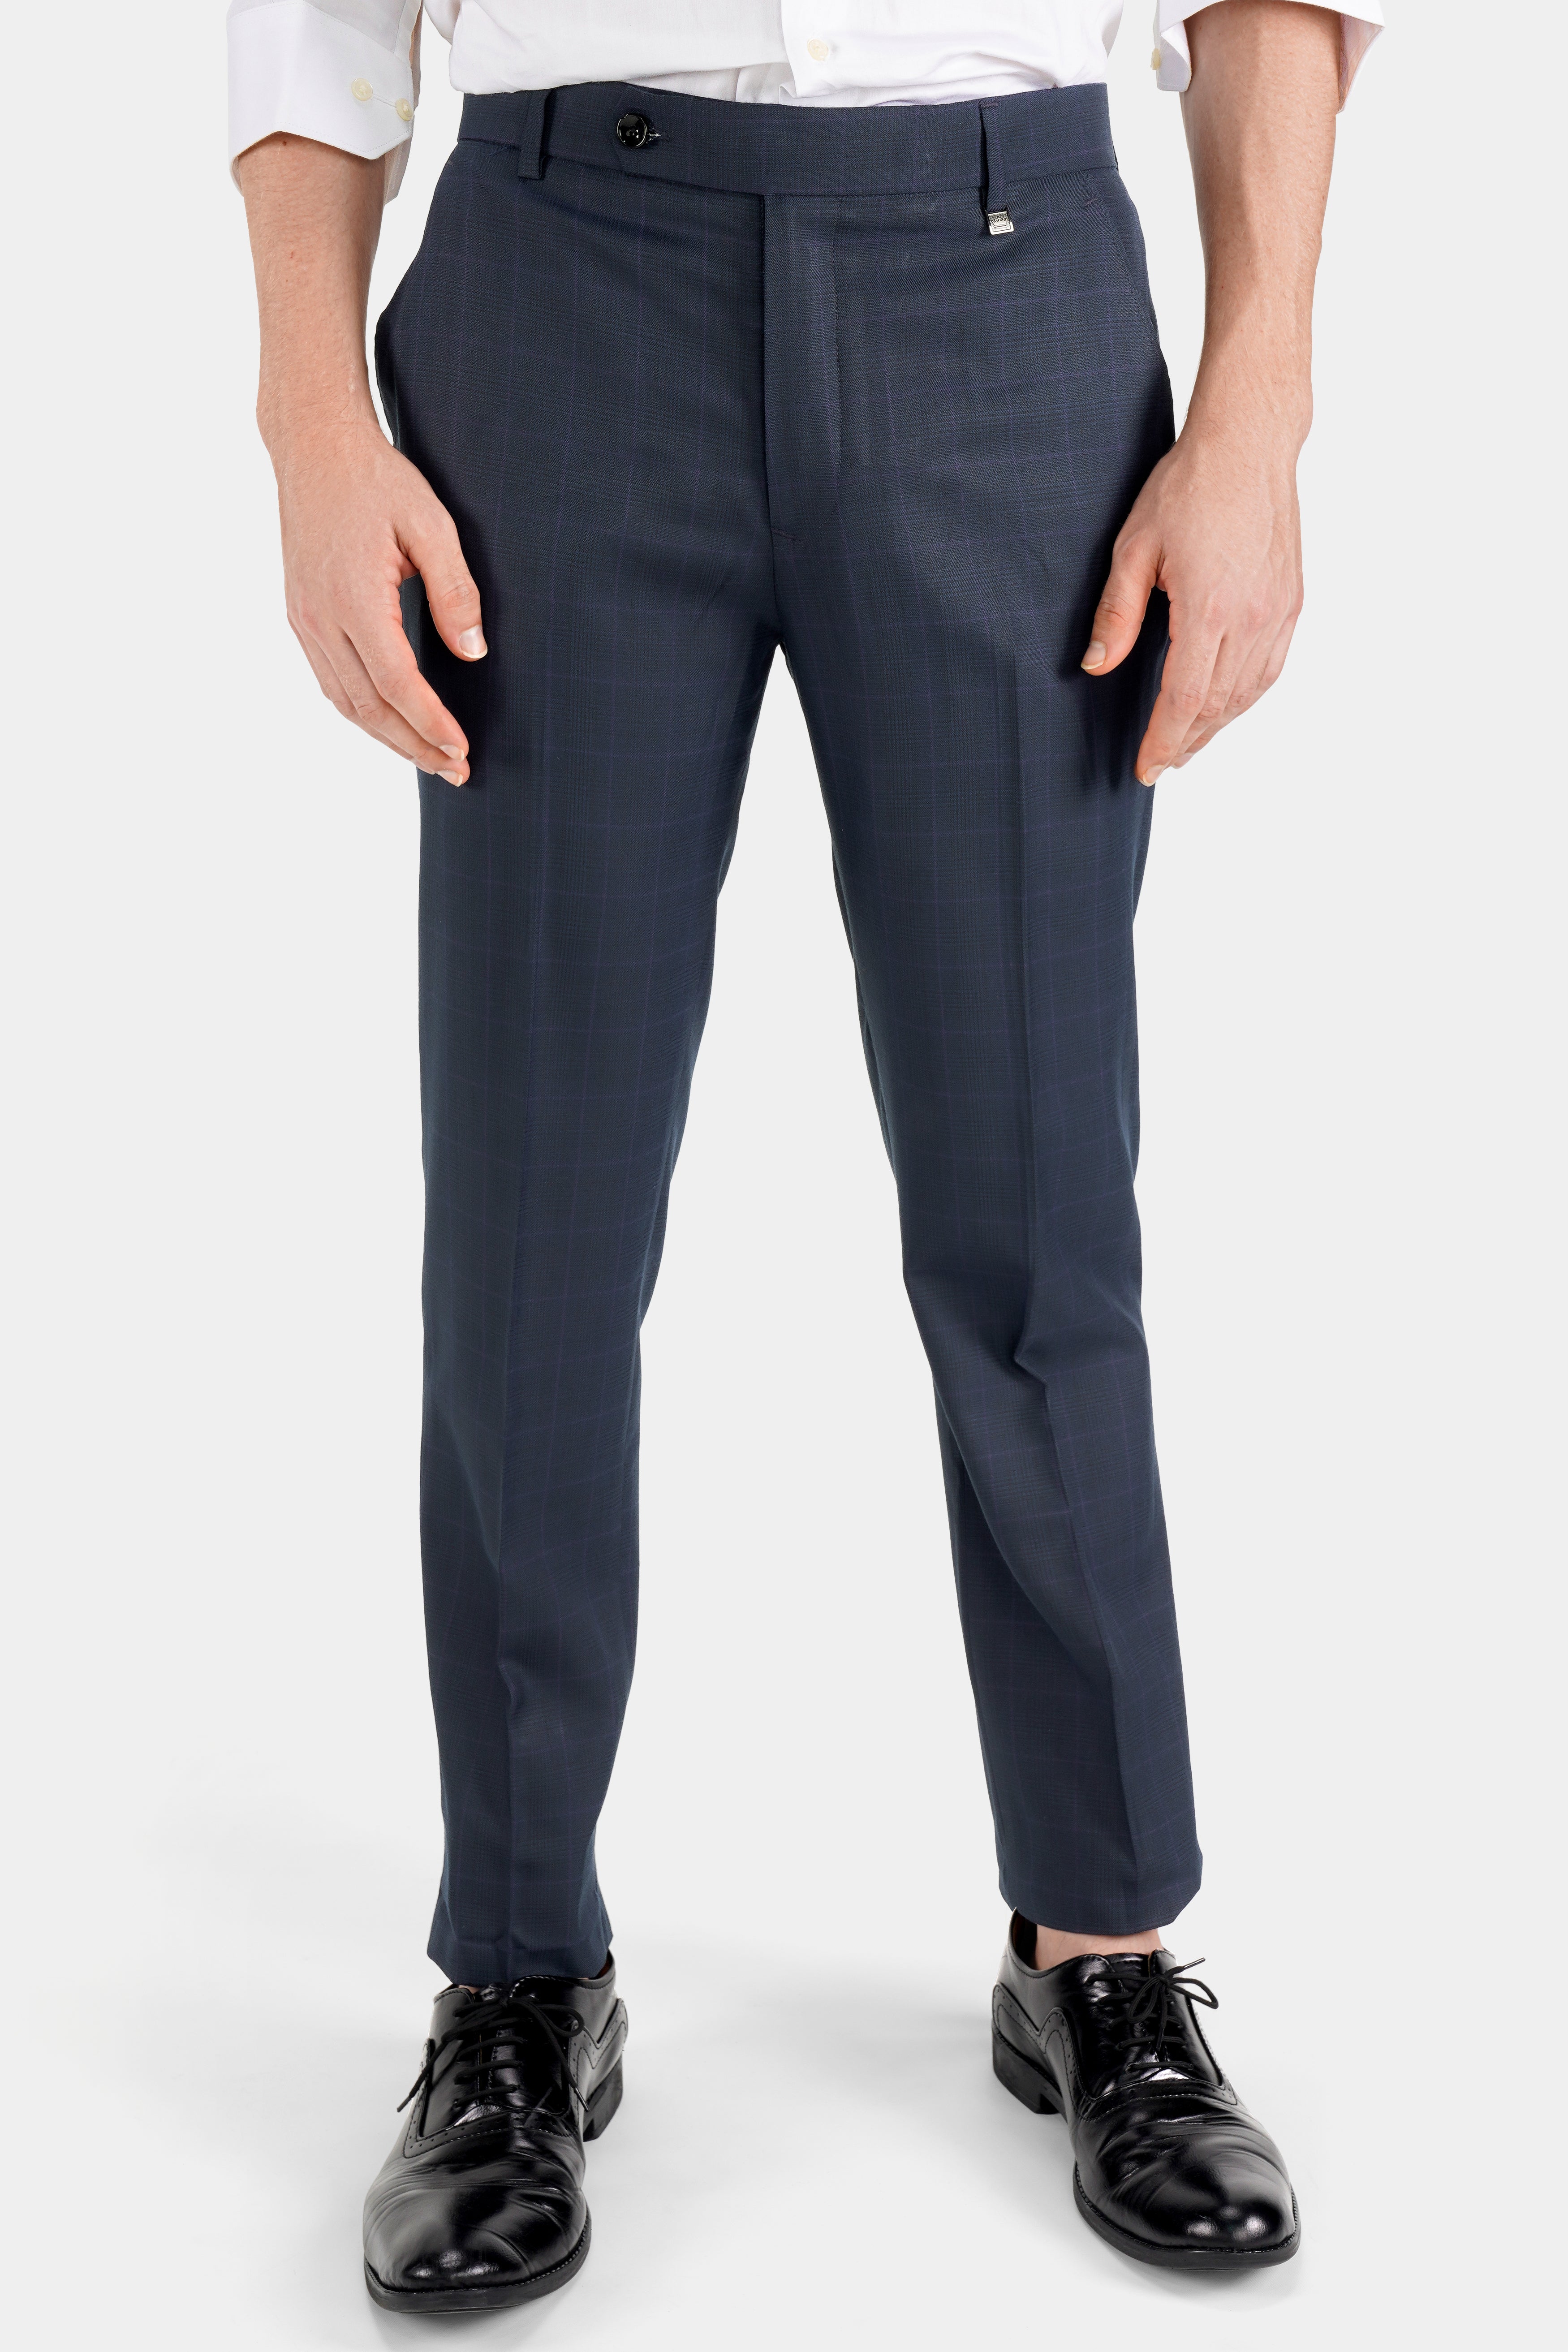 Designer Tailored Pants for Men - FARFETCH